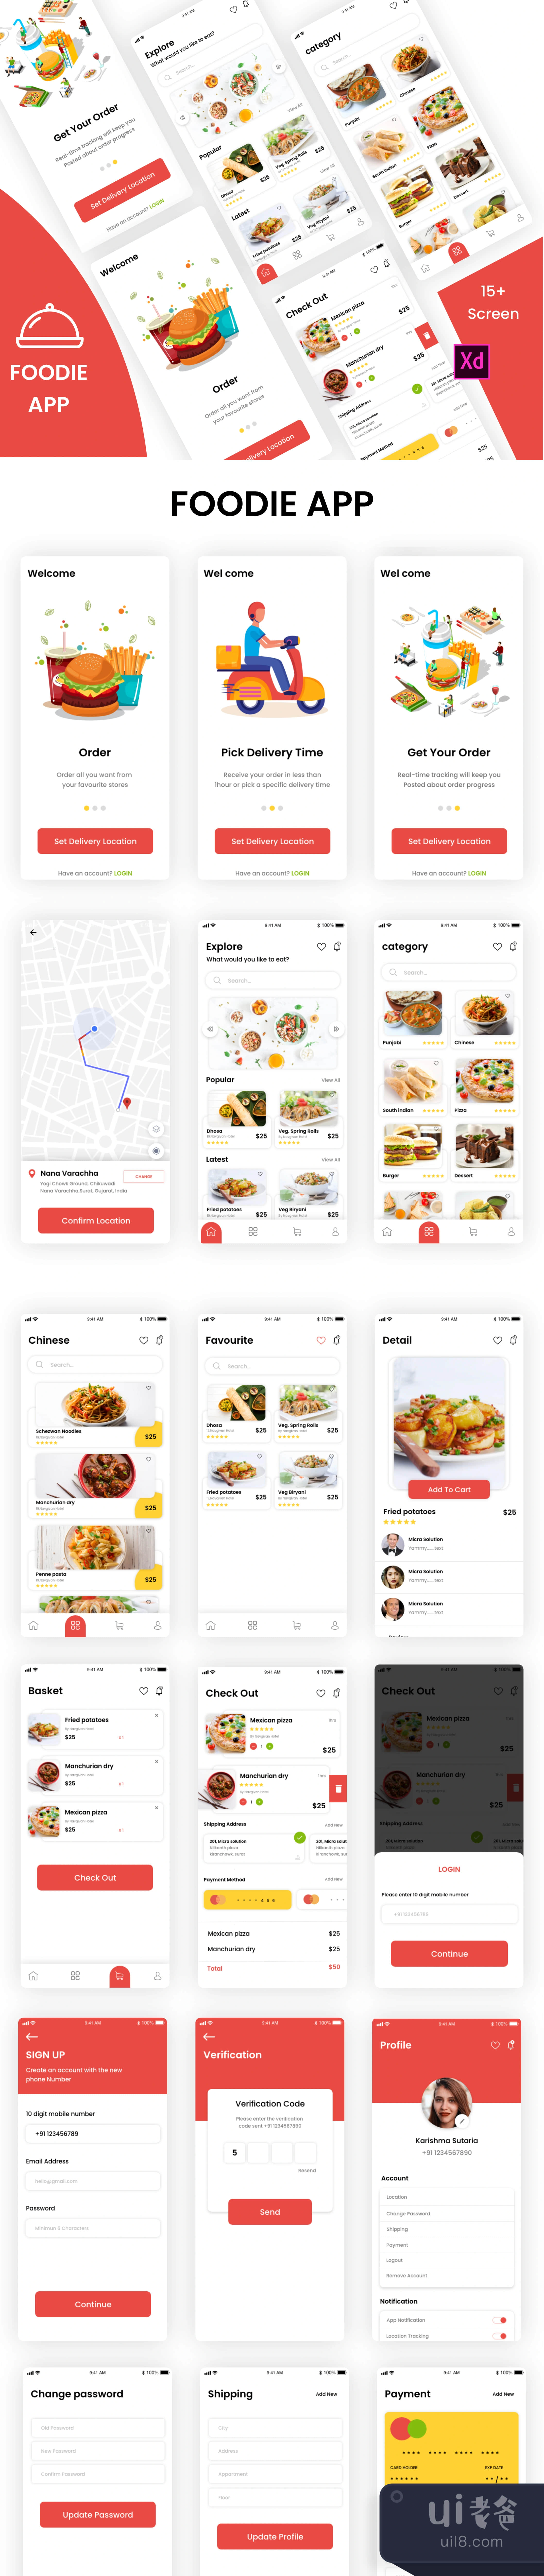 饮食业应用 (Foodie App)插图